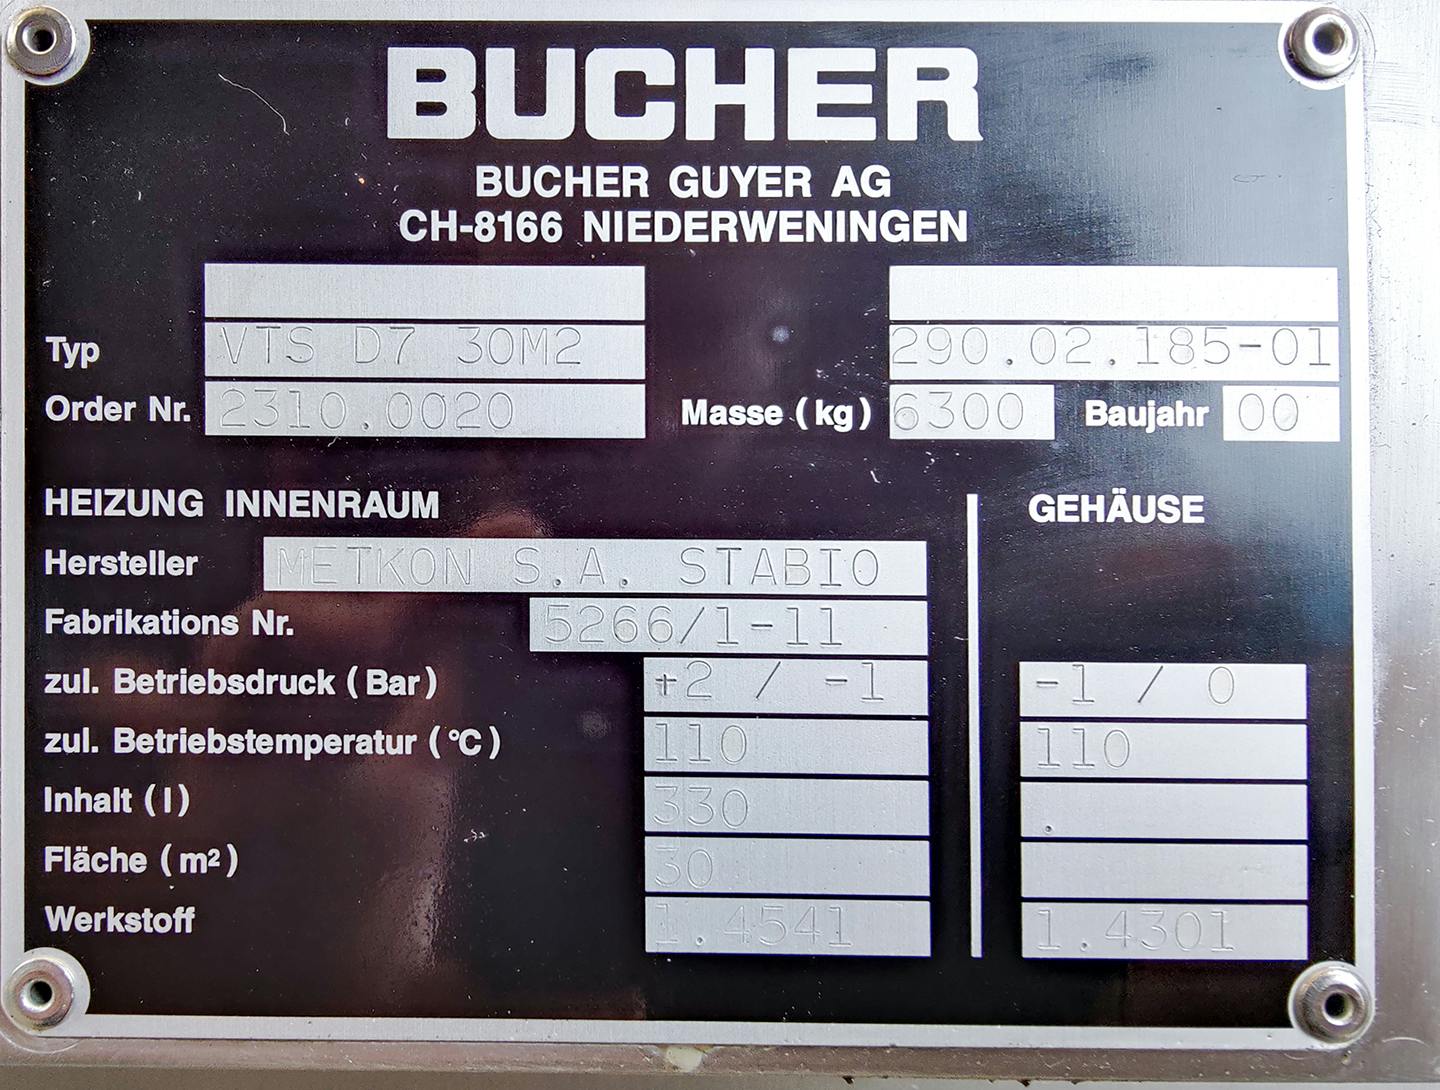 Bucher VTS-D7 30m2 - Tray dryer - image 8